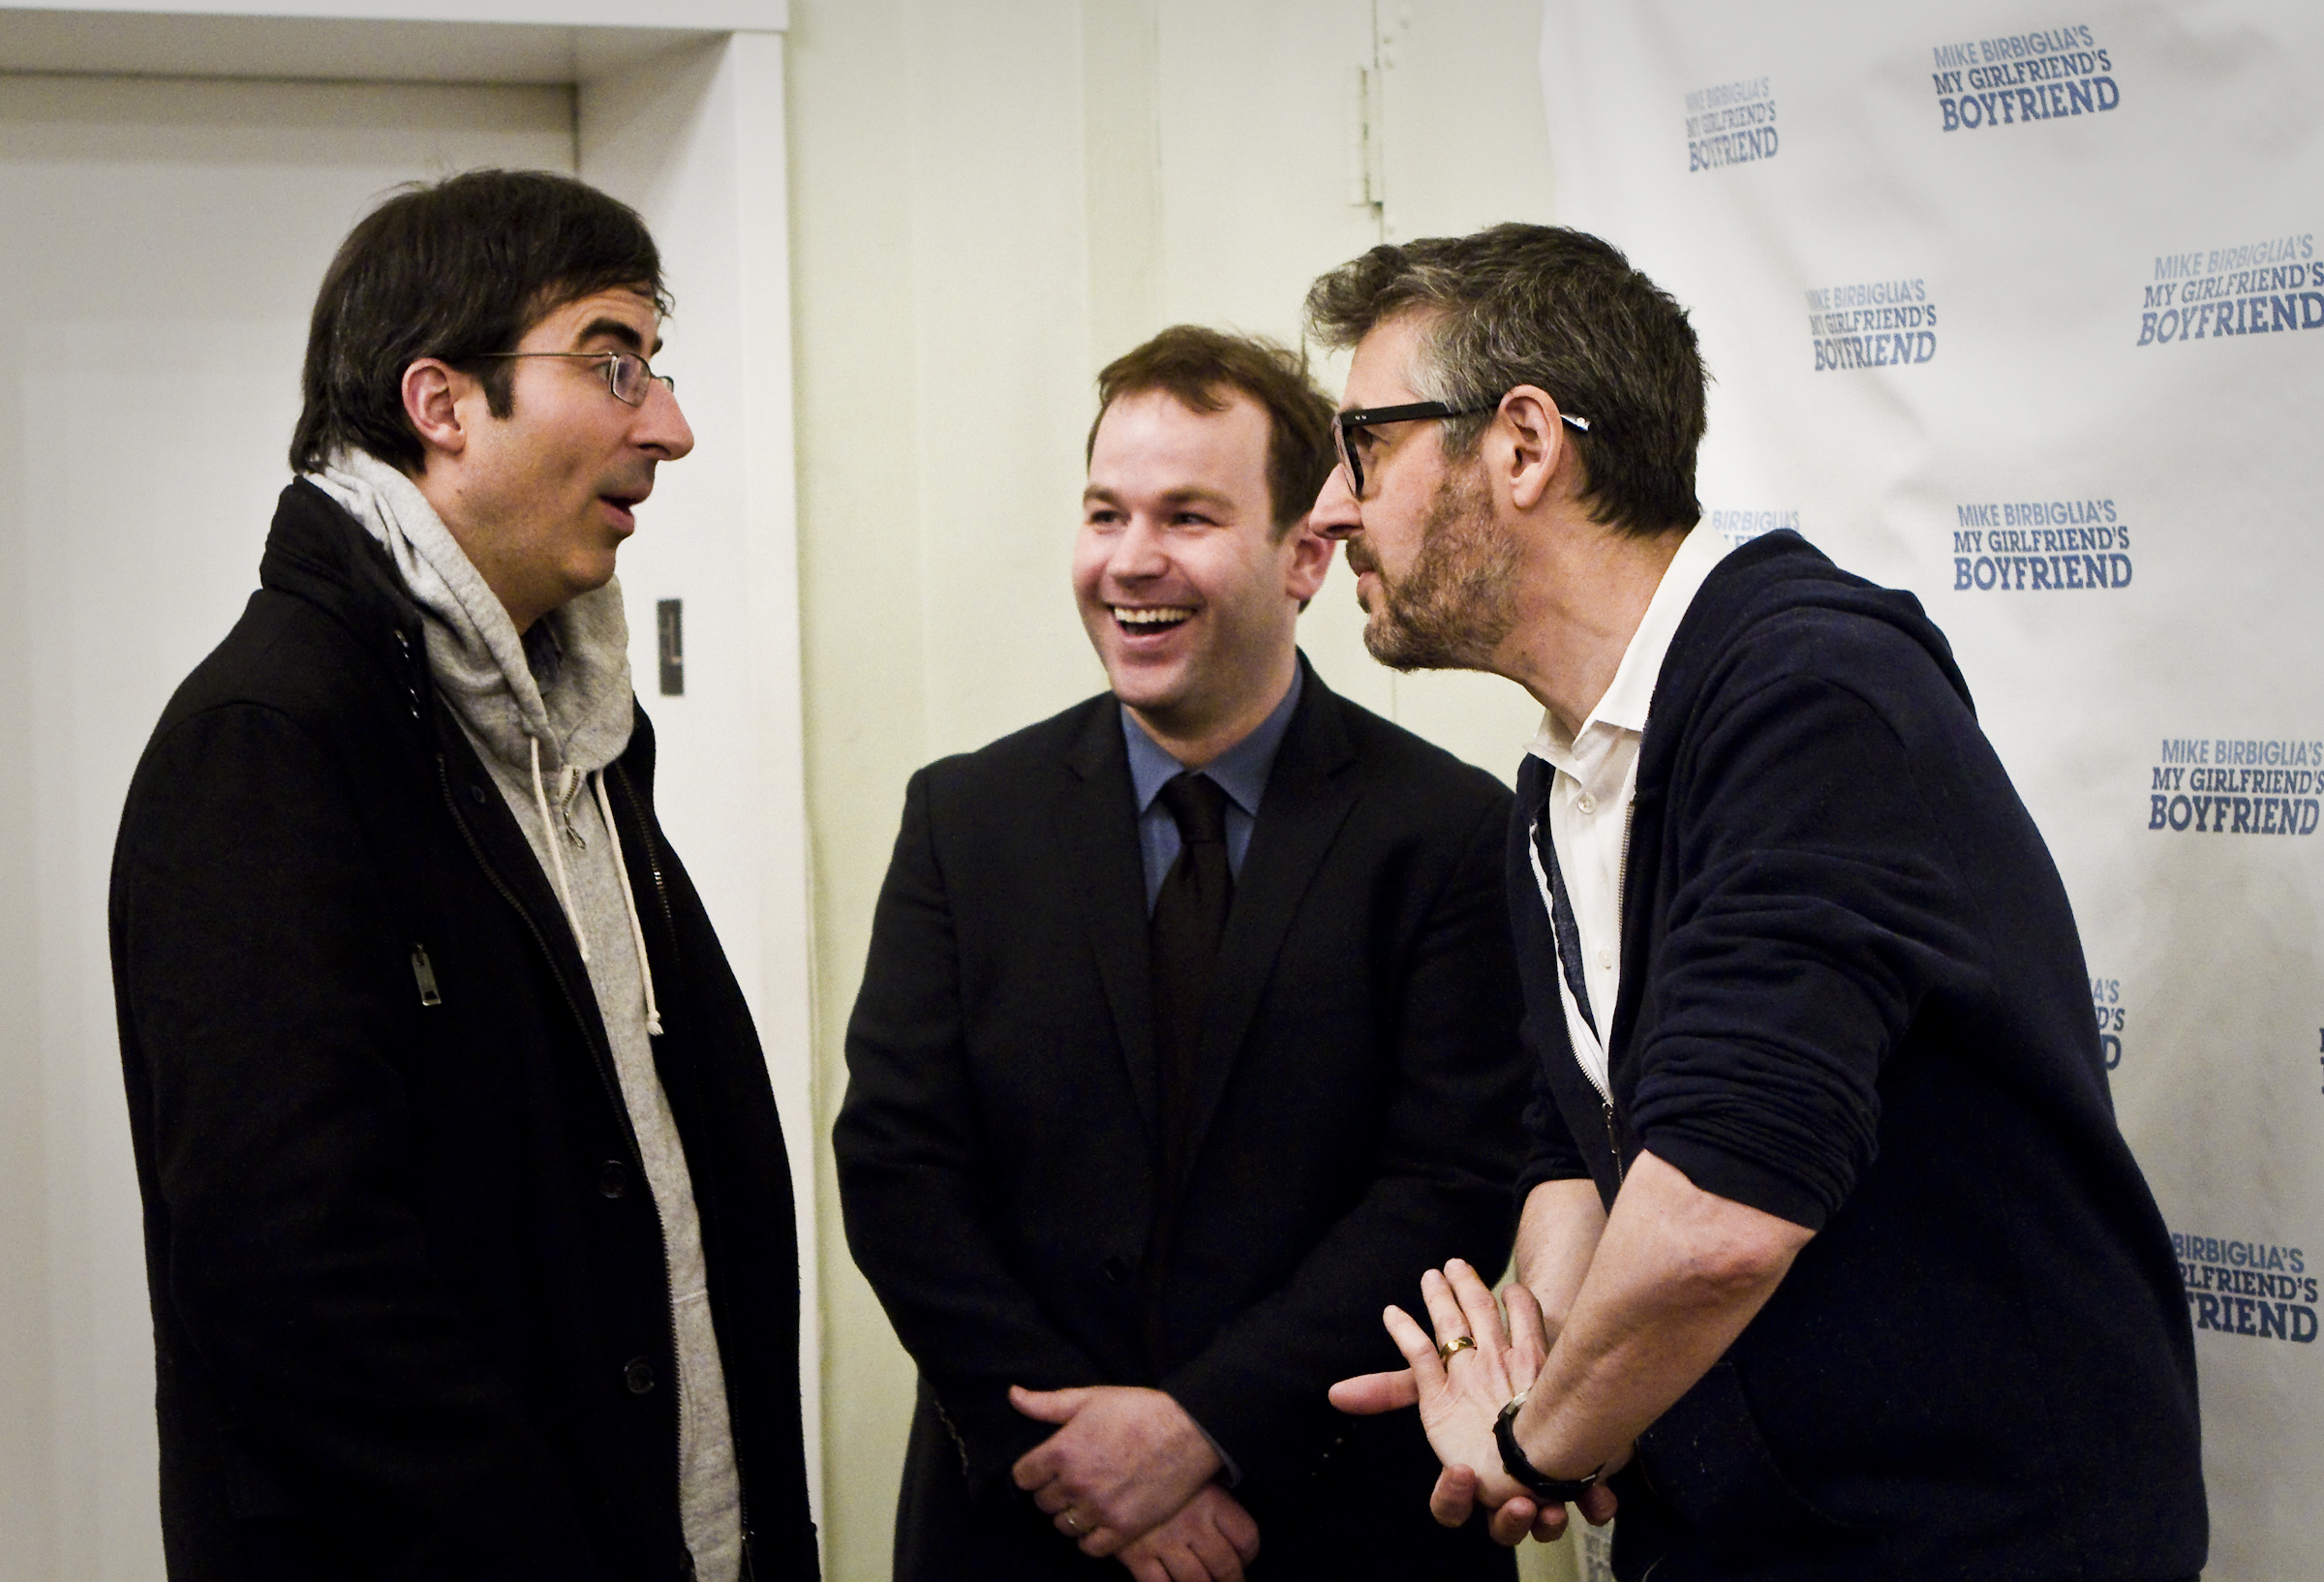 John Oliver, Mike Birbiglia, and Ira Glass at the premier of Mike Birbiglia's My Girlfriend's Boyfriend in New York City.